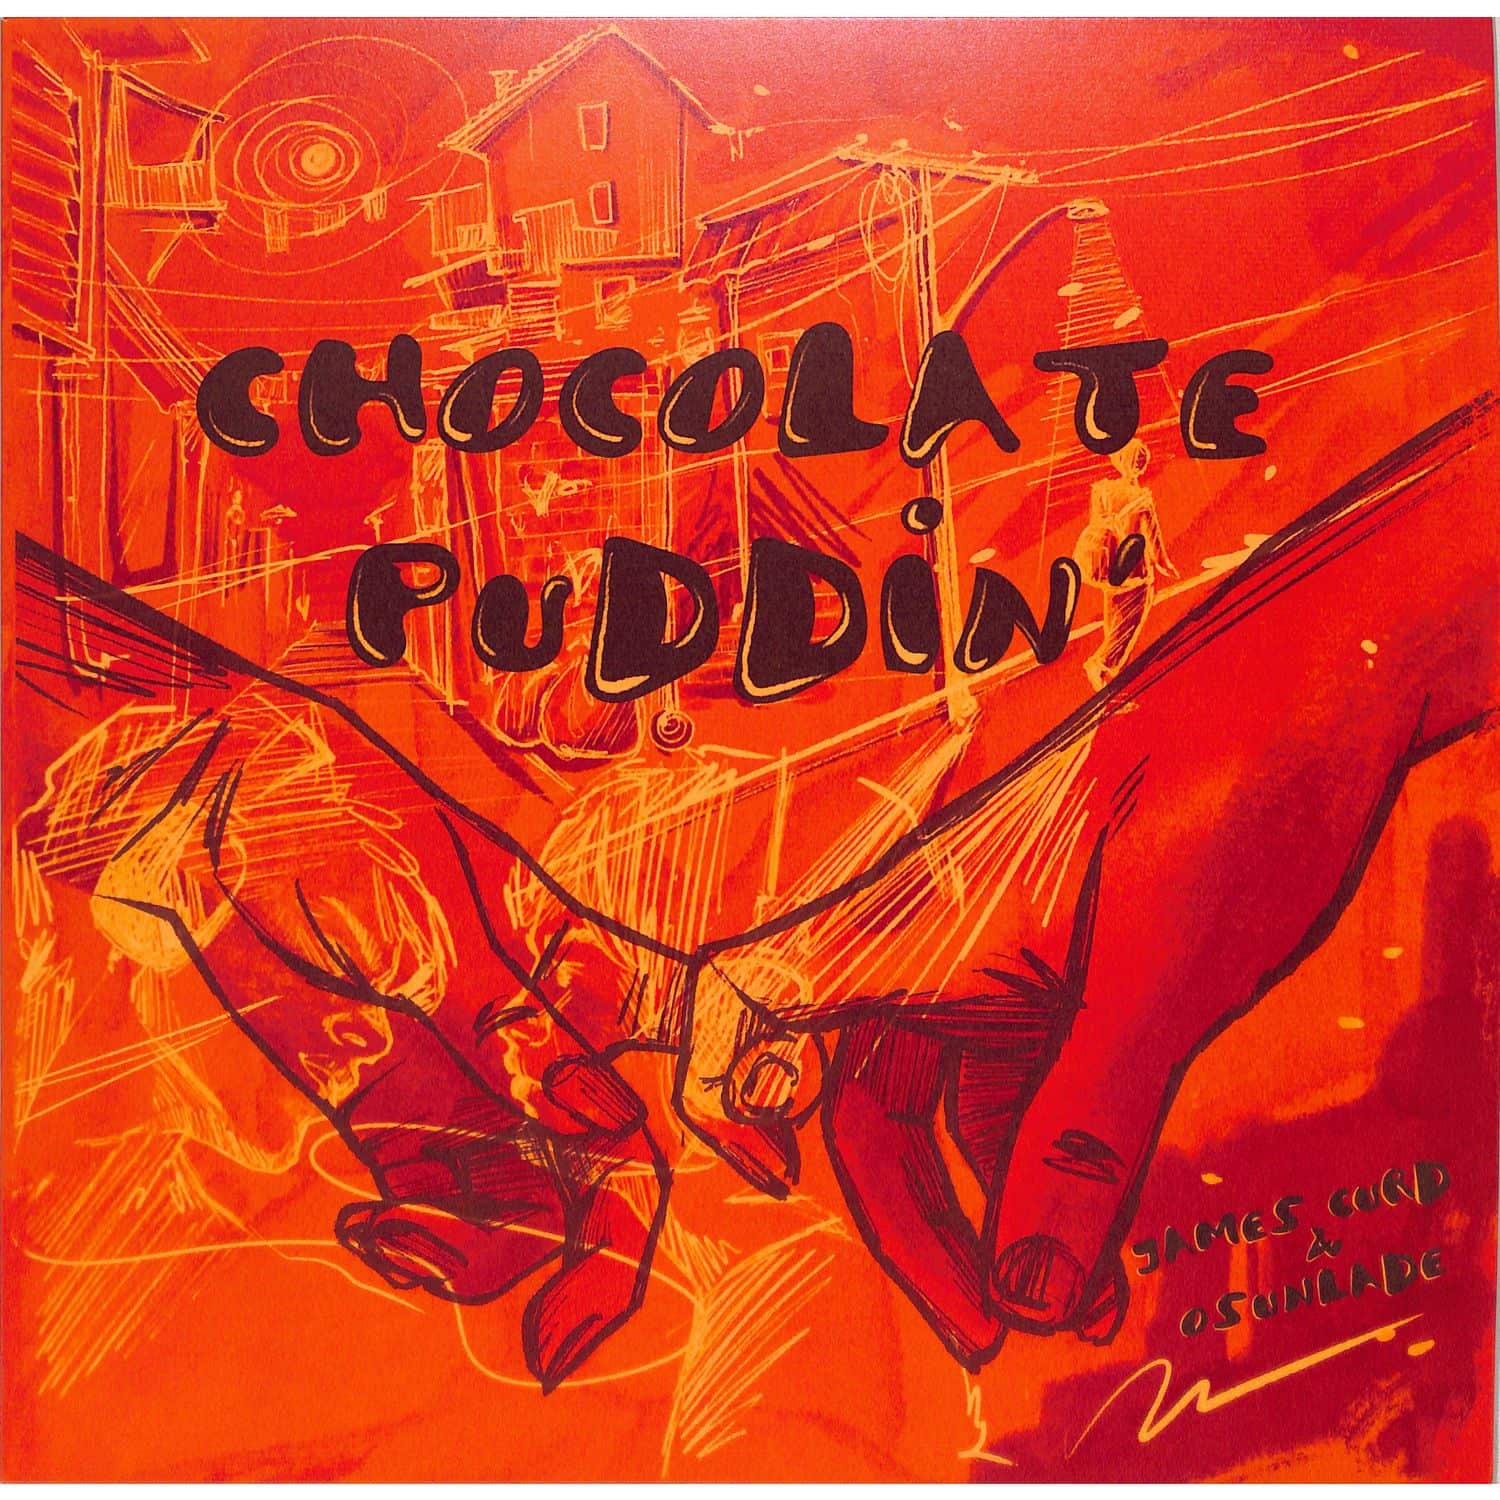 James Curd, Osunlade - CHOCOLATE PUDDIN 